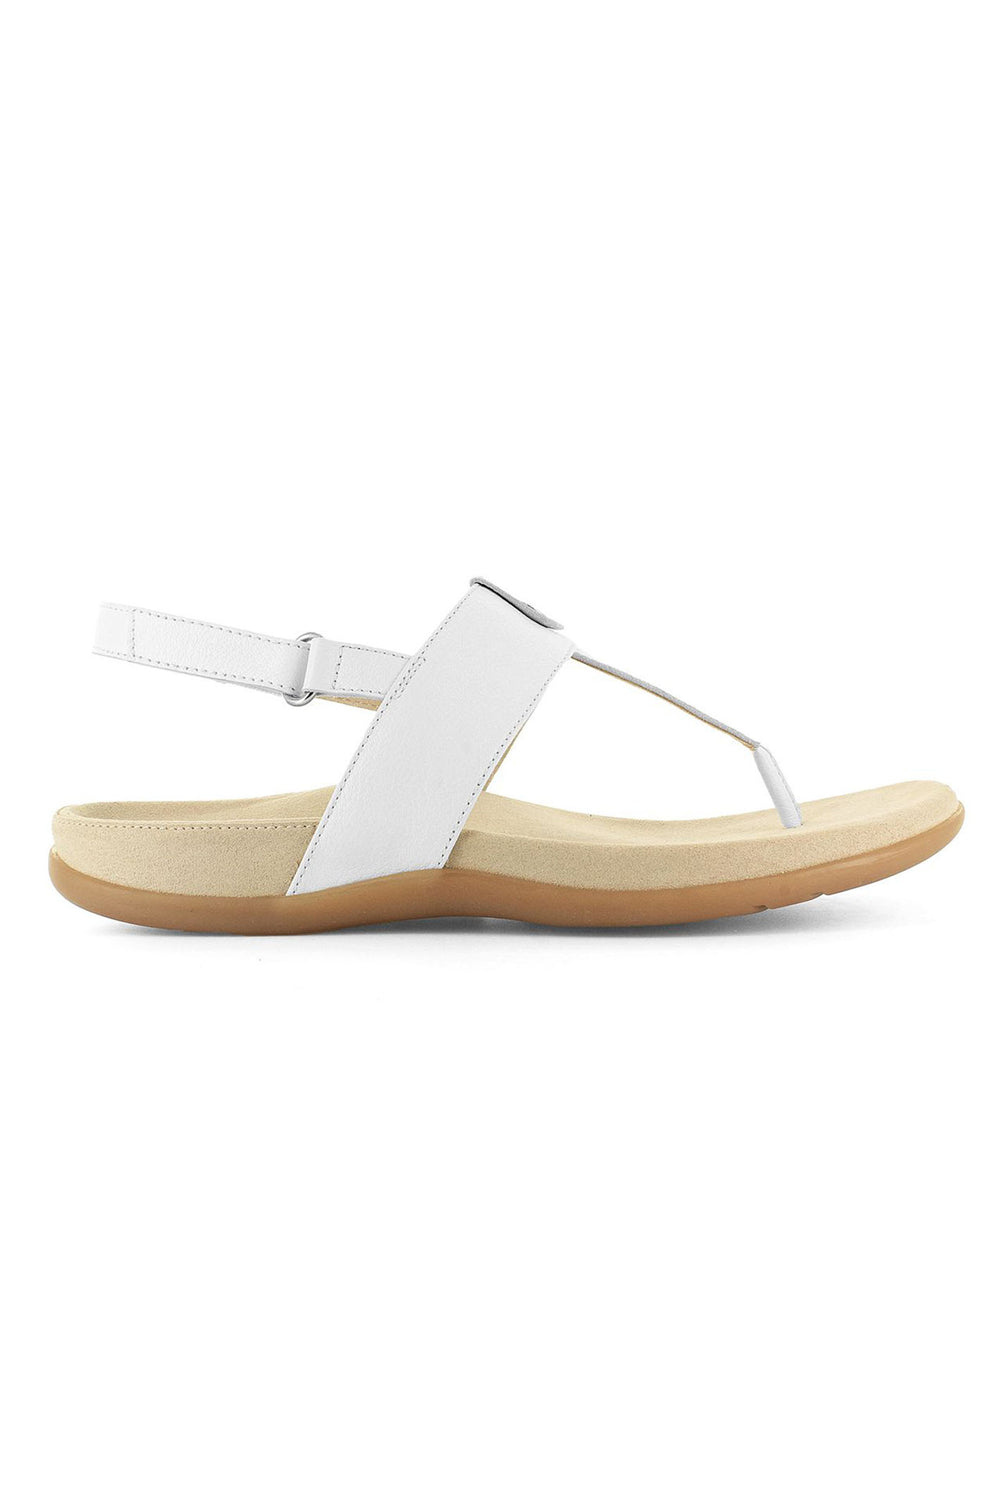 Strive Alana White Toe-Post Leather Sandal - Shirley Allum Boutique